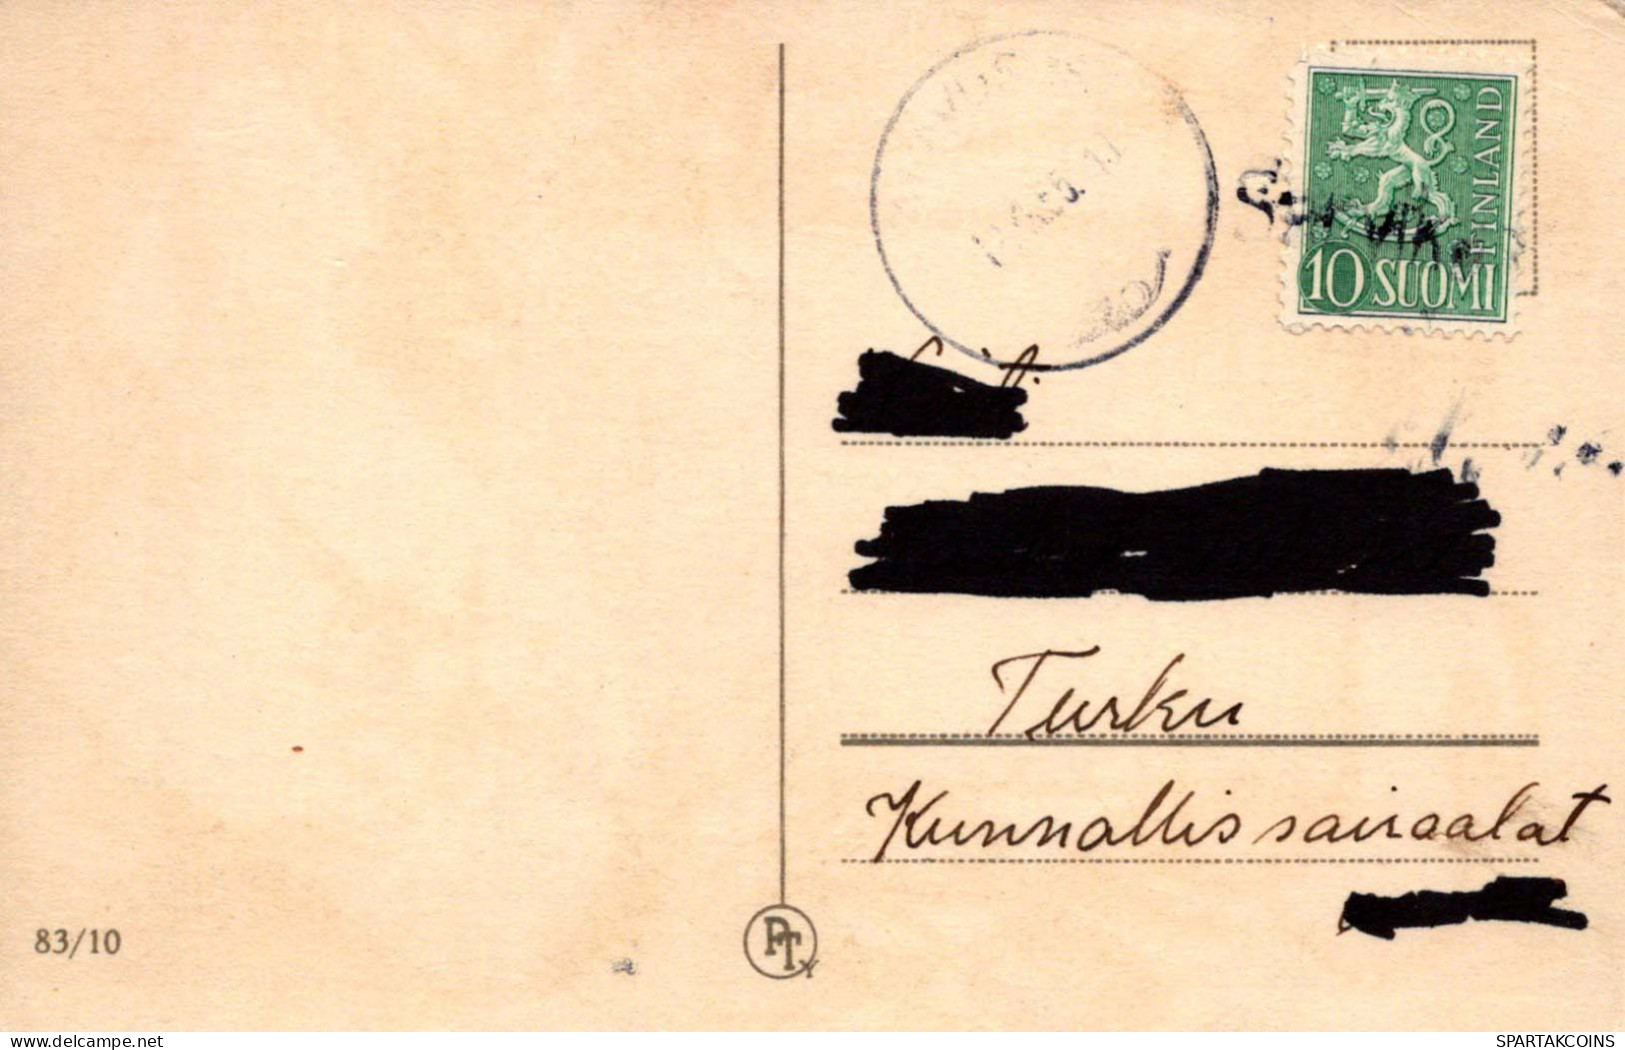 FLORES Vintage Tarjeta Postal CPA #PKE526.ES - Fleurs